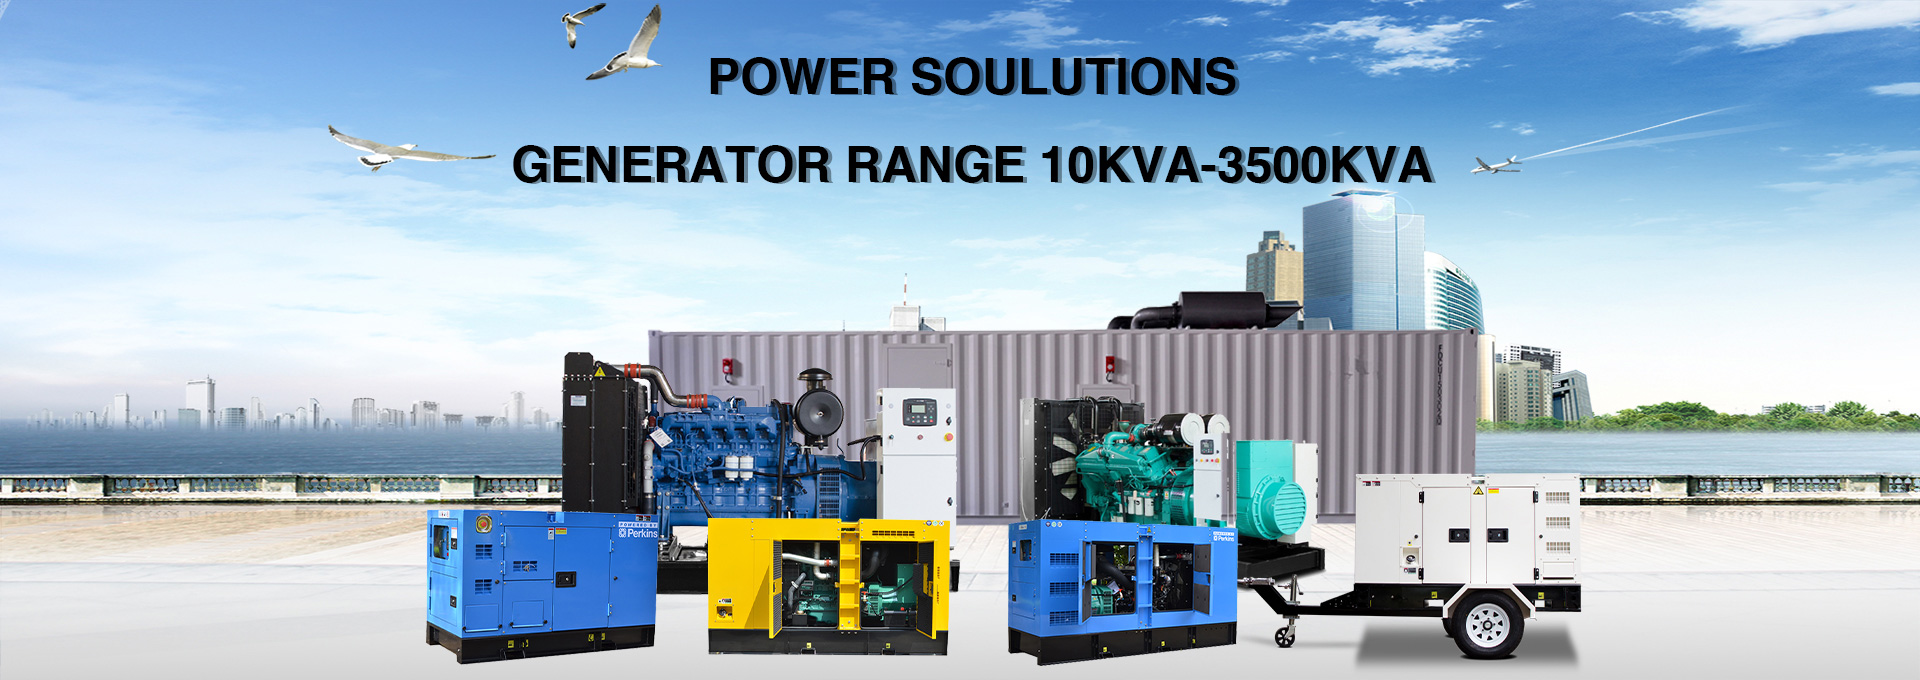 Power-Solutions-Generator-Range-Banner-04